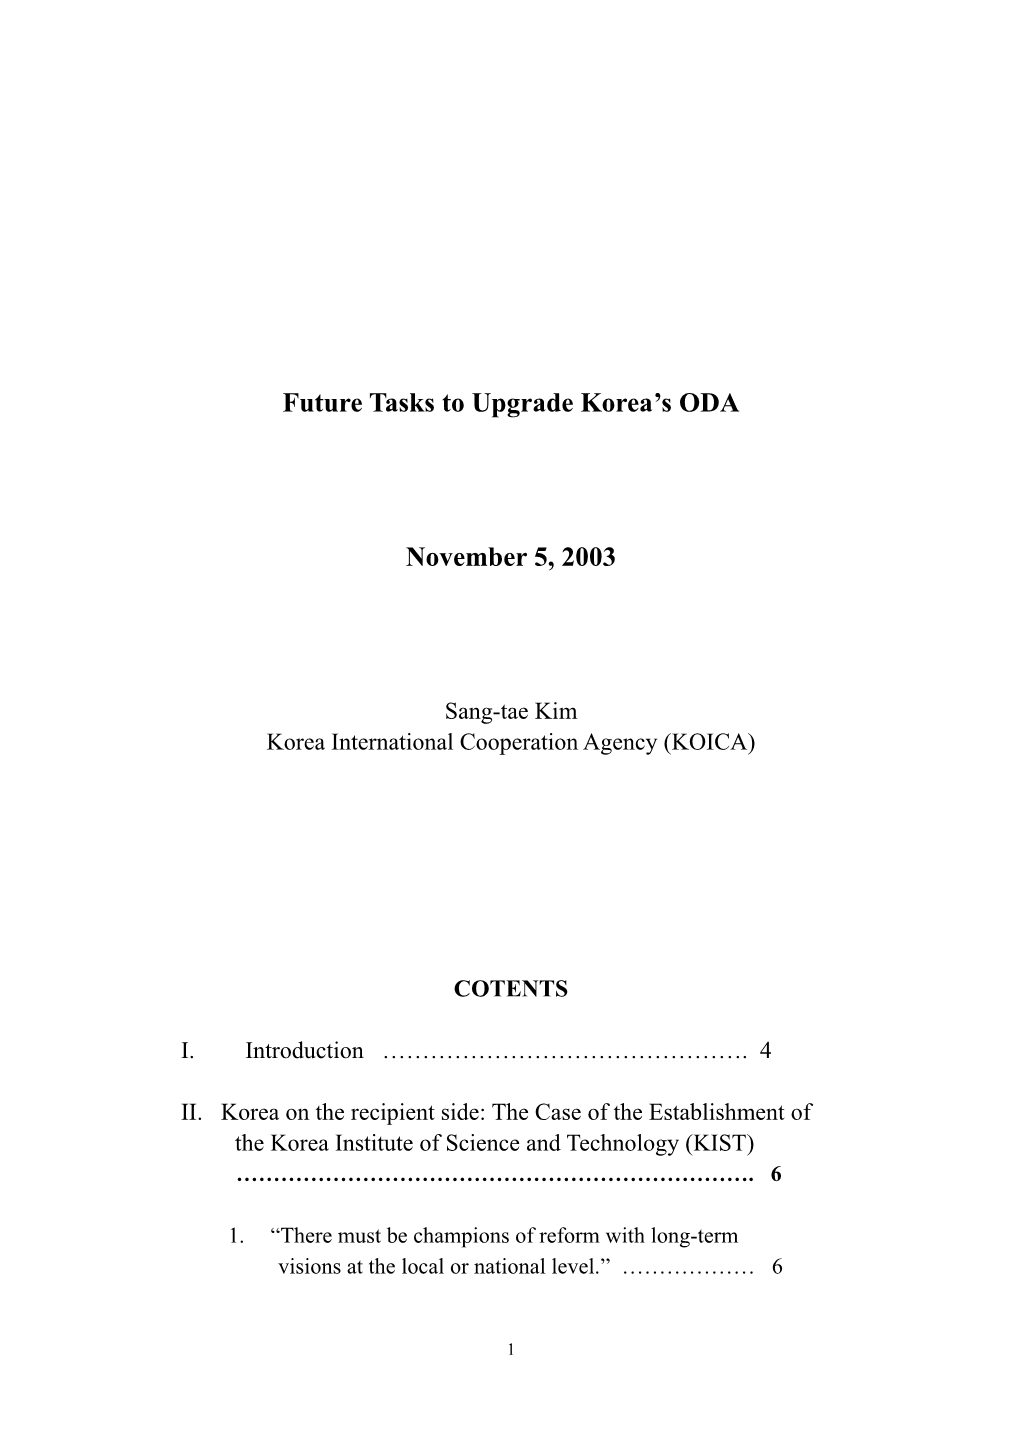 ODA Policy of the Republic of Korea